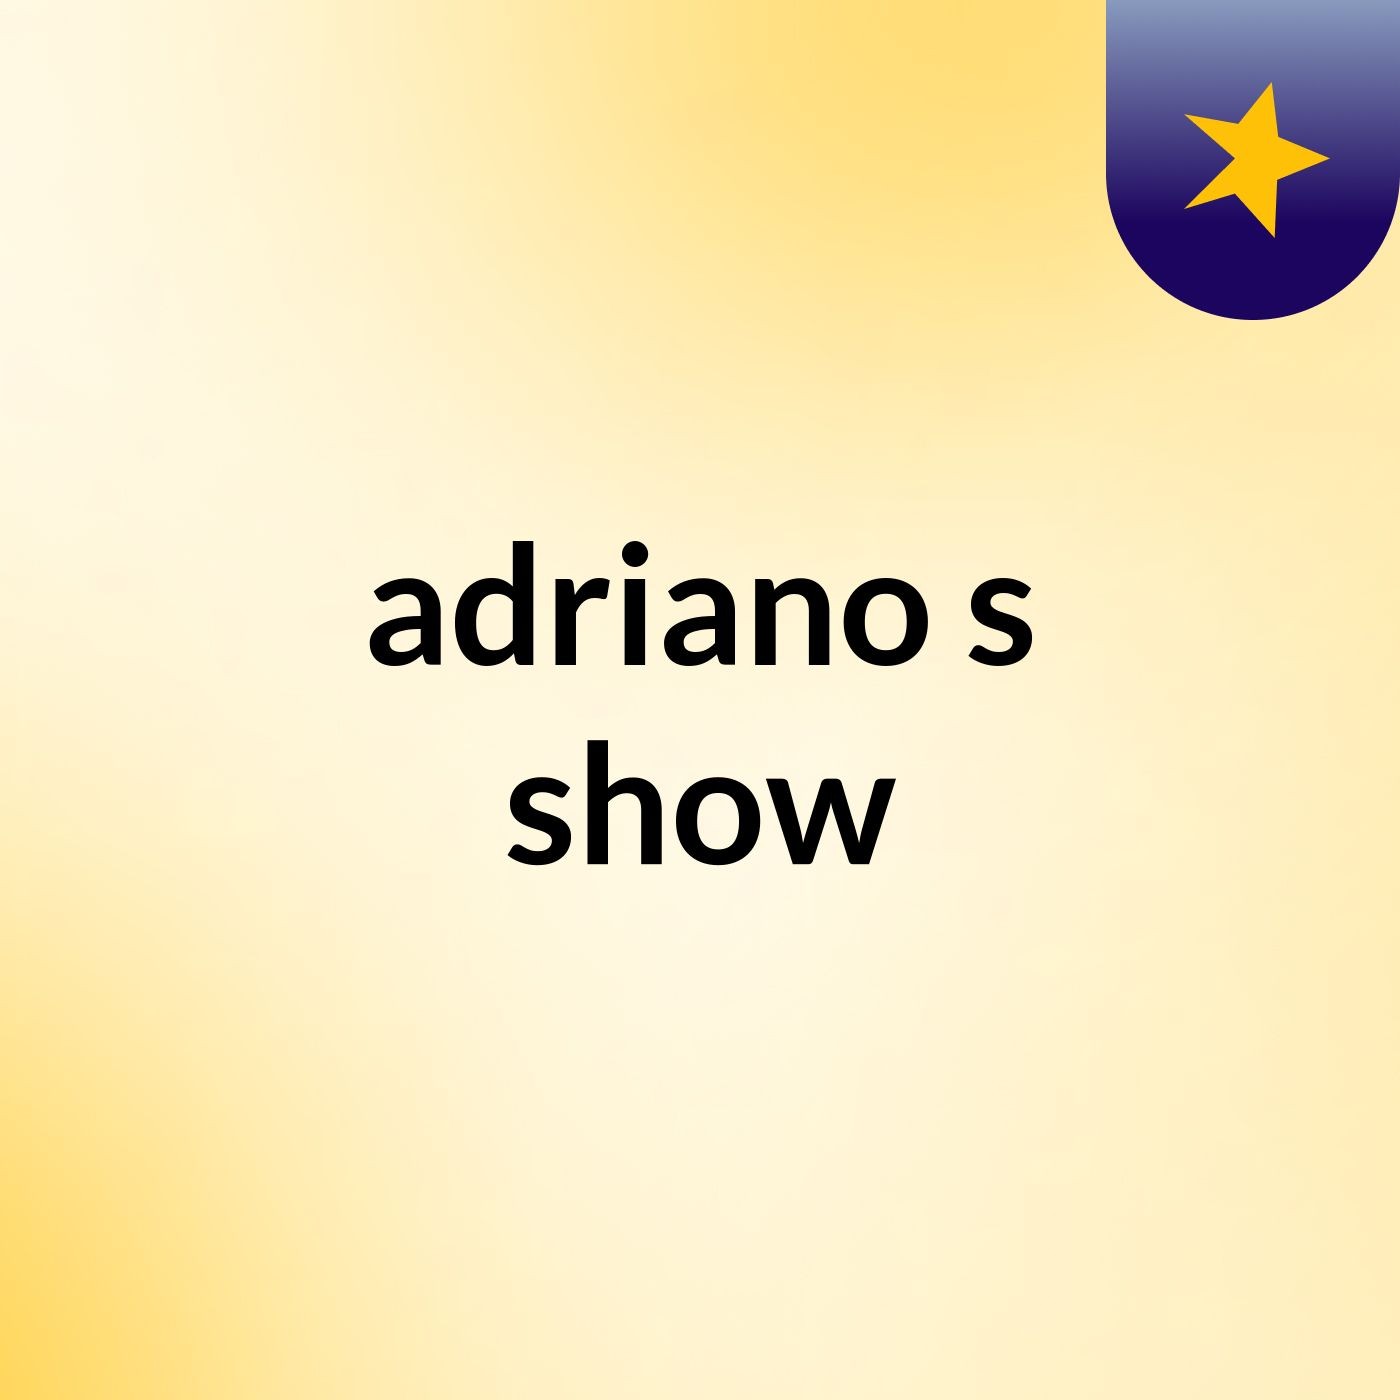 adriano's show